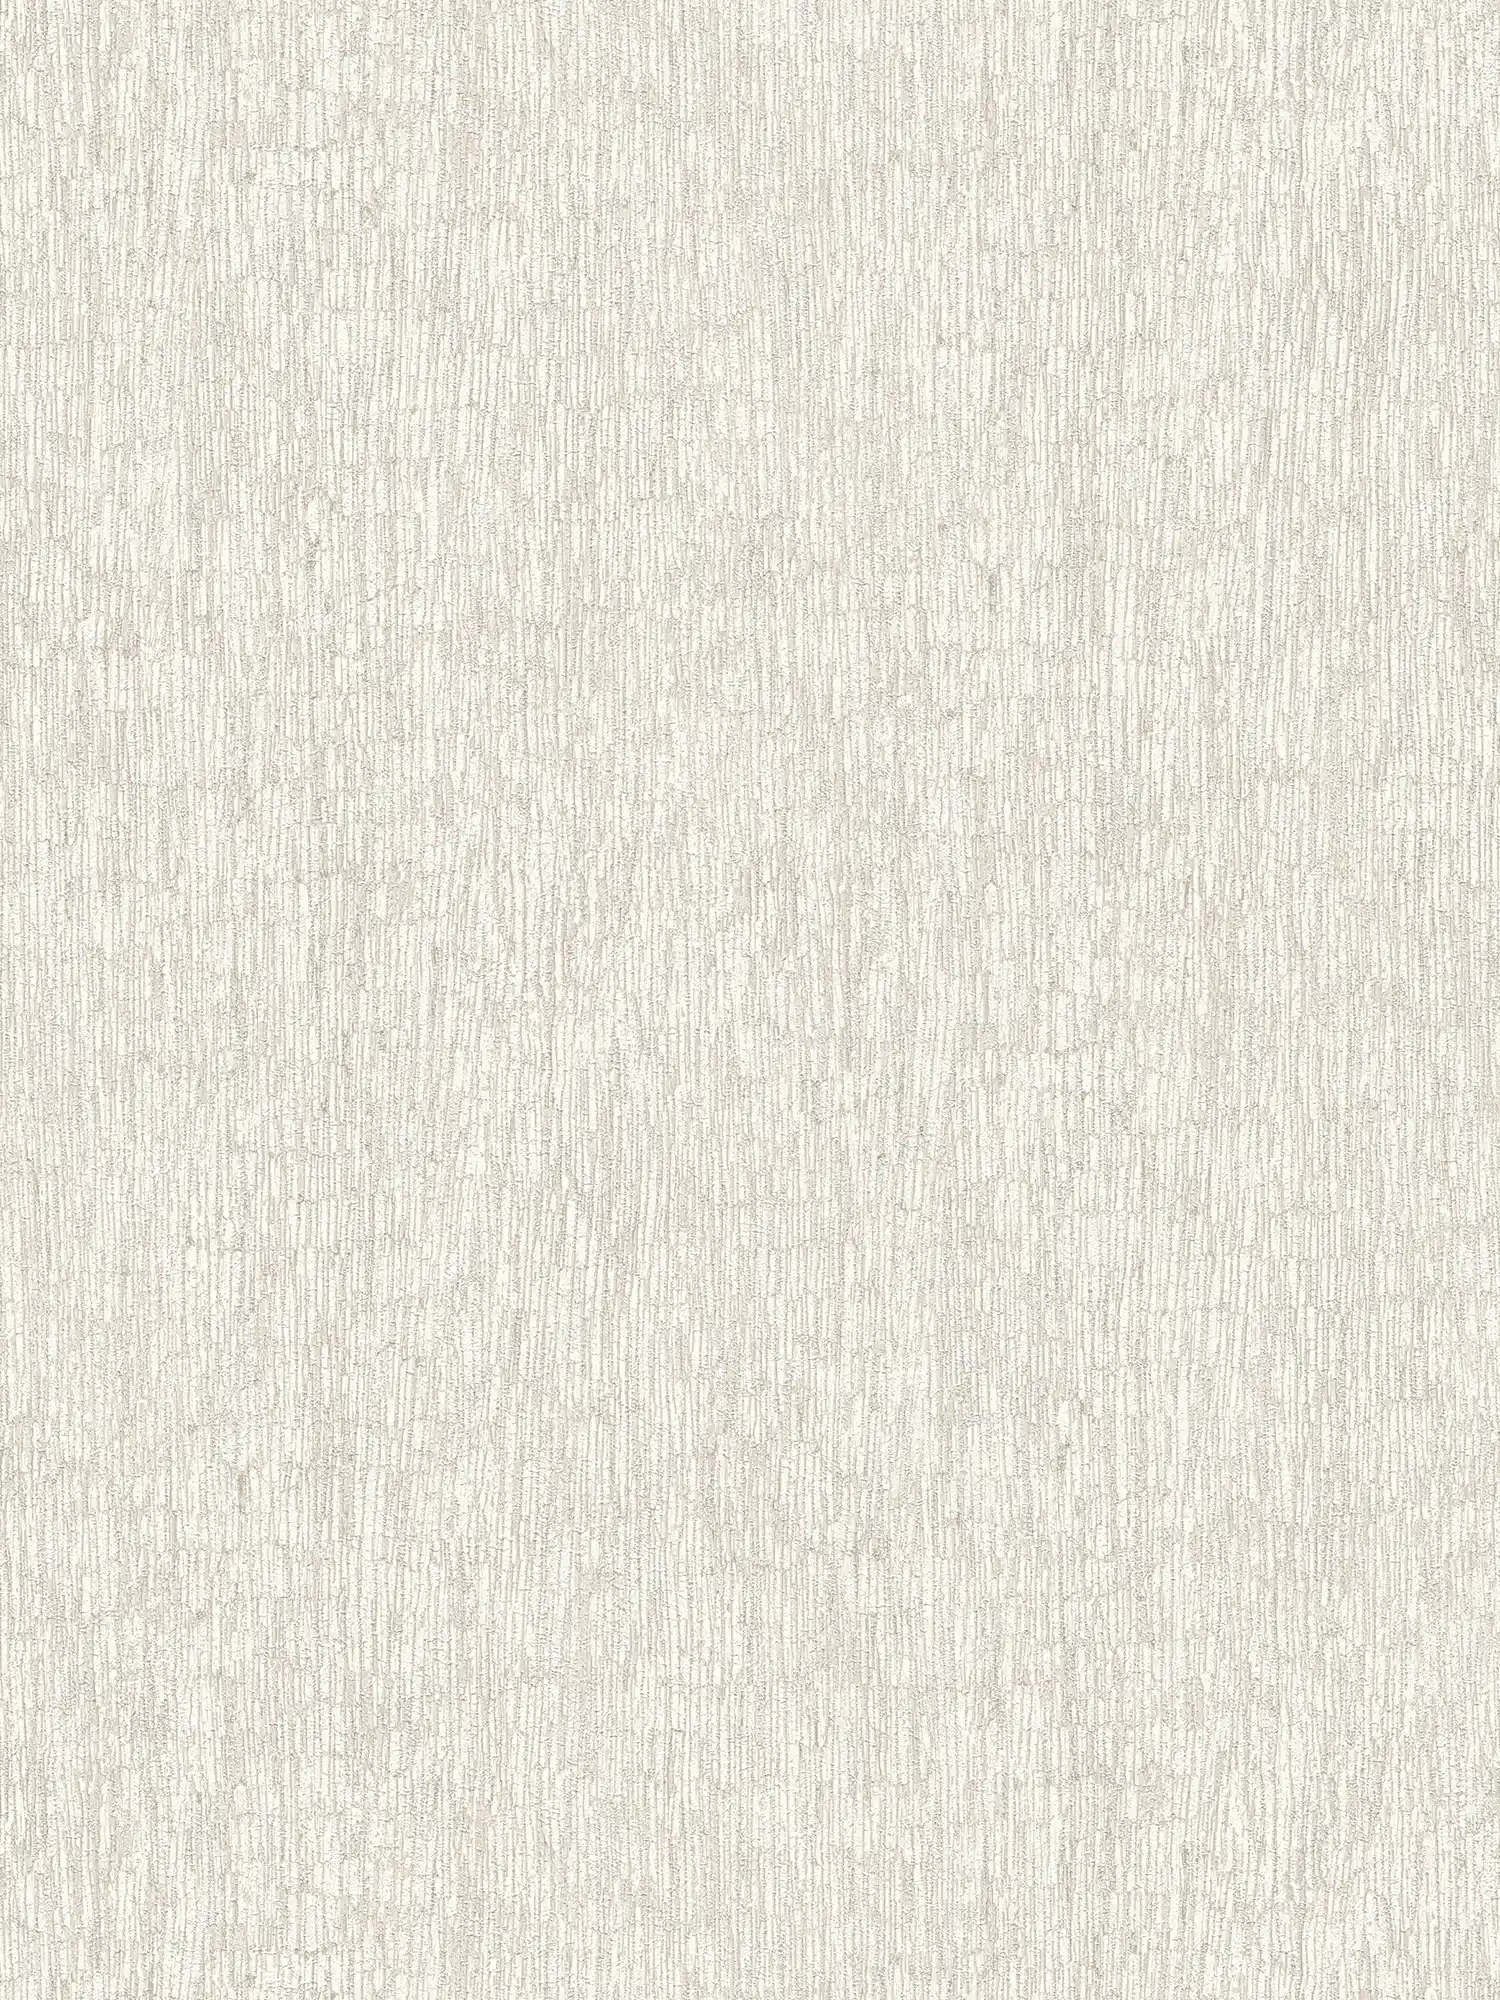 Vliesbehang in textiellook, licht glanzend - wit, grijs, zilver
